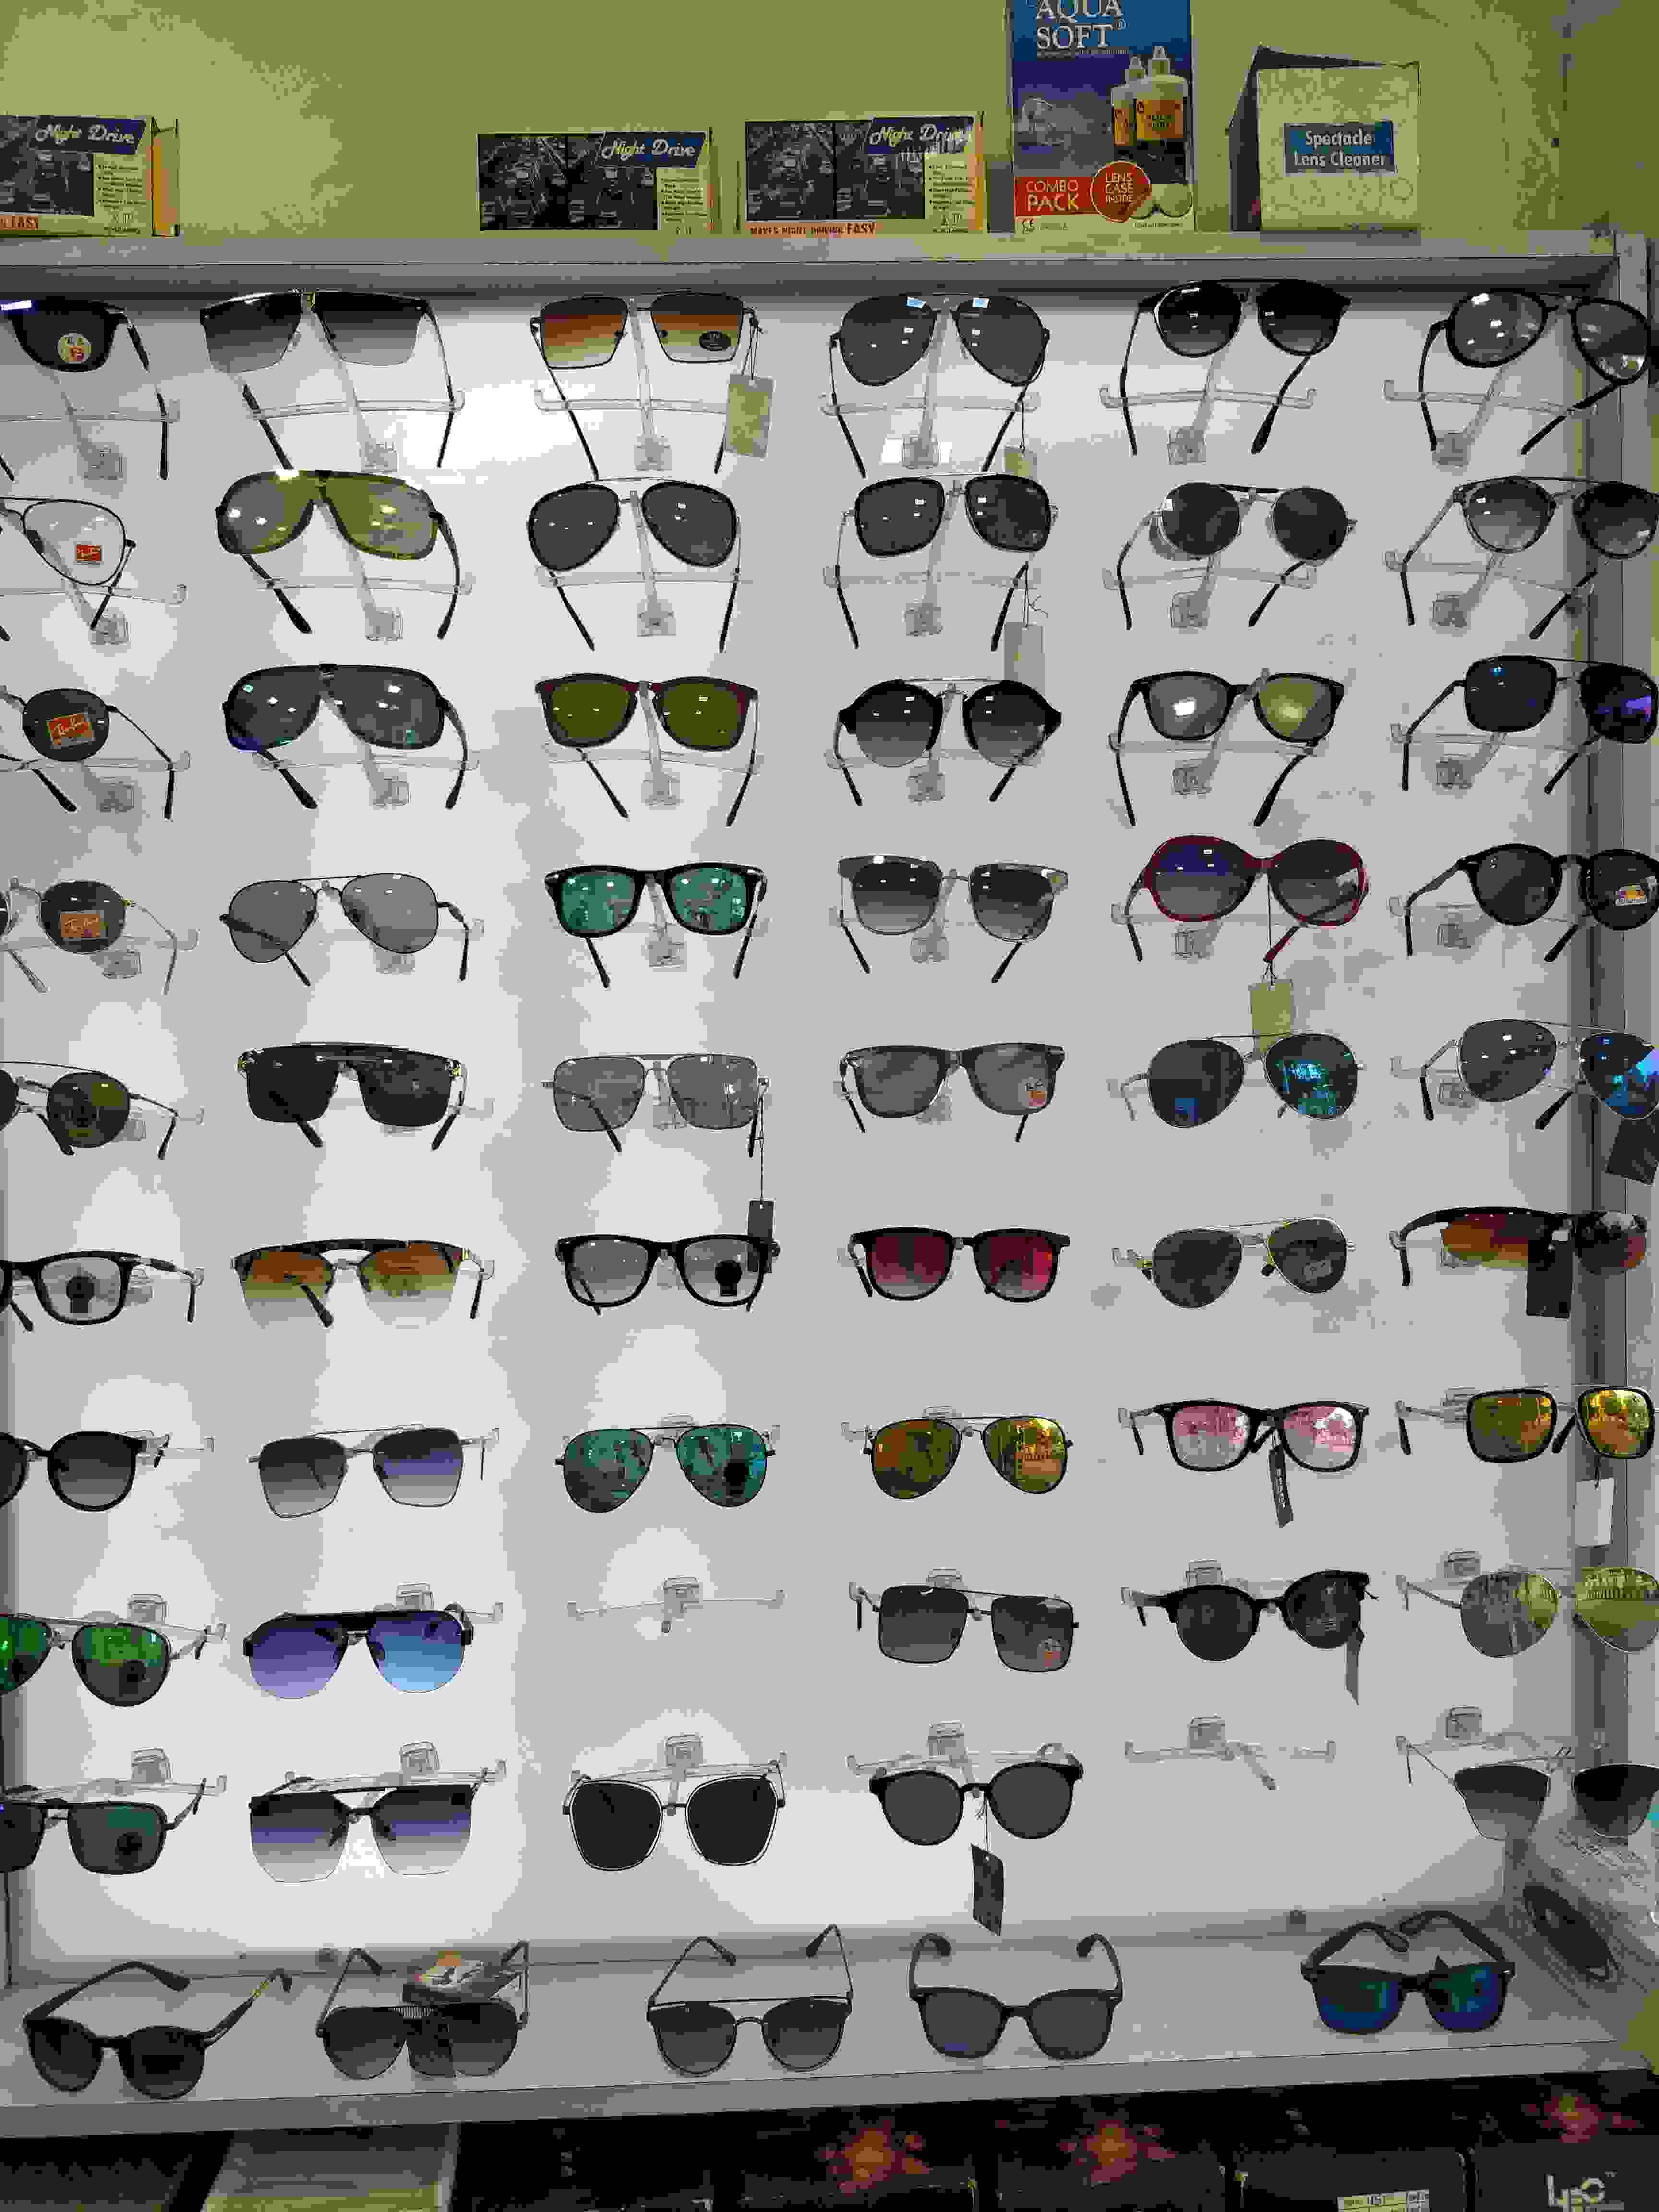 20% OFf on Branded sunglasses 